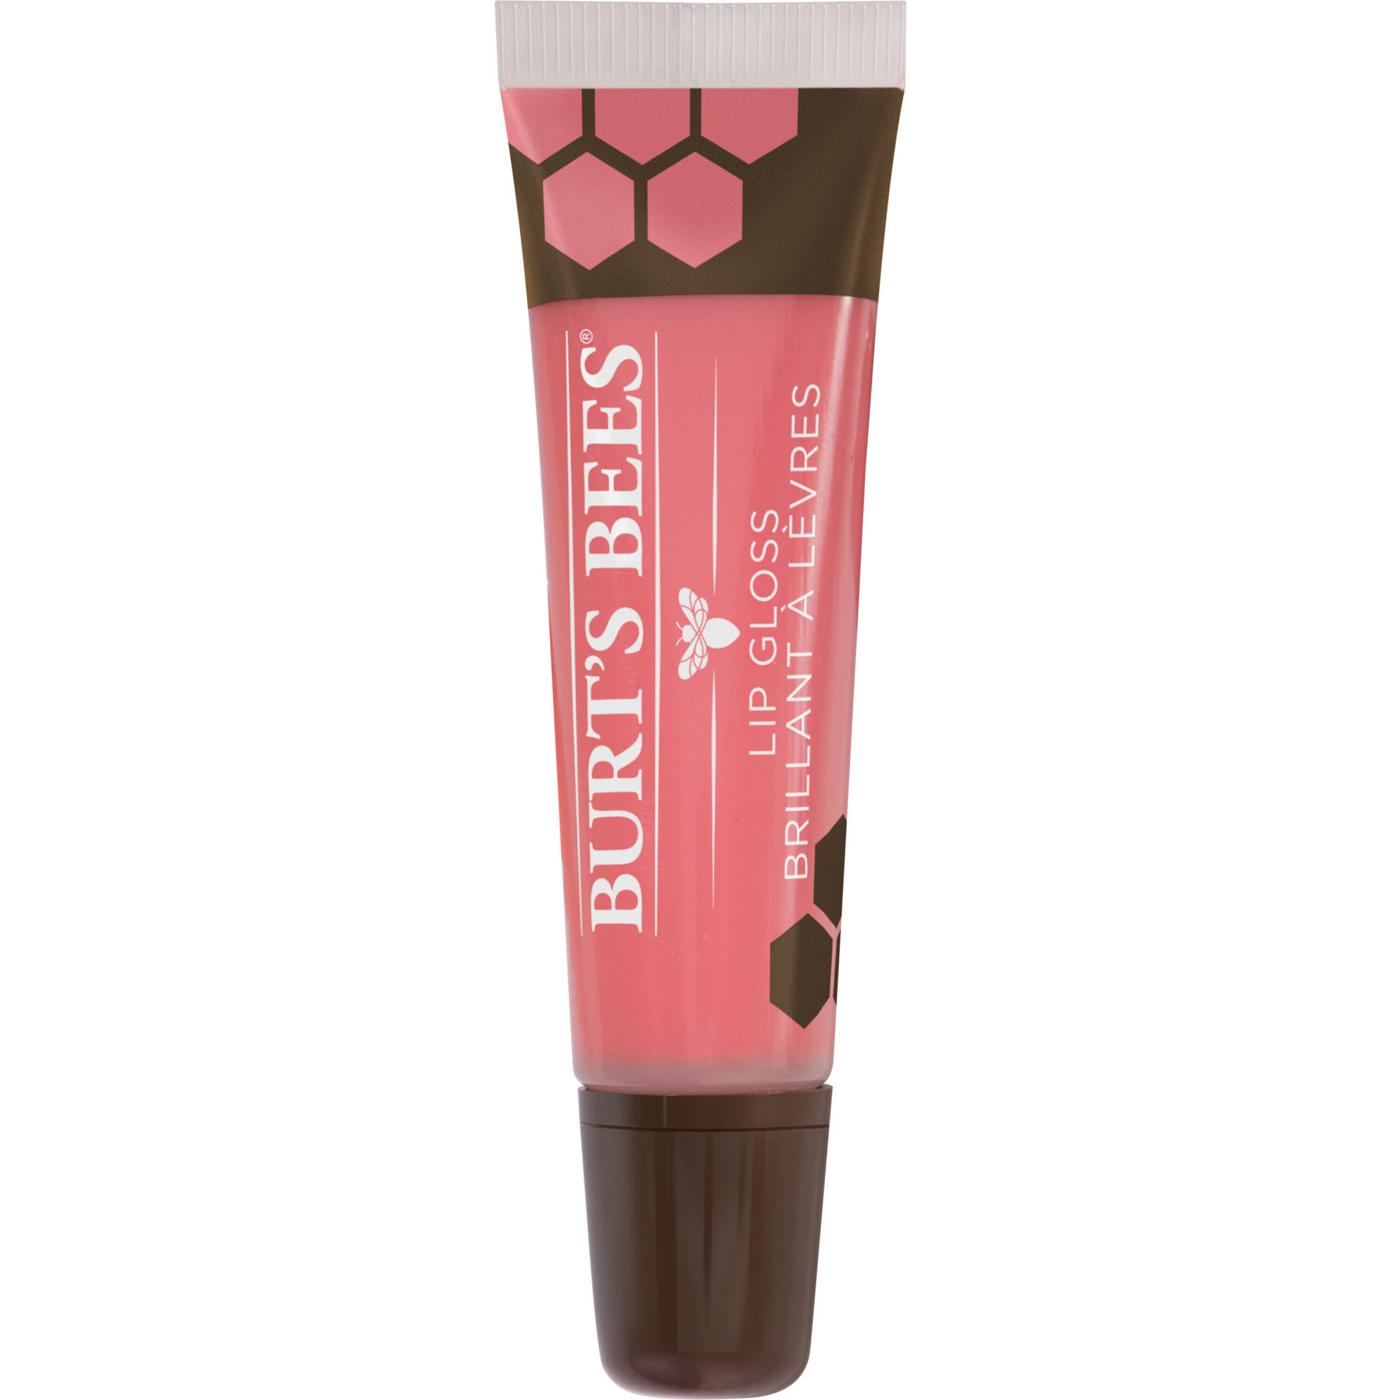 Burt's Bees 100% Natural Origin Moisturizing Lip Gloss - Punch of Pink; image 1 of 4